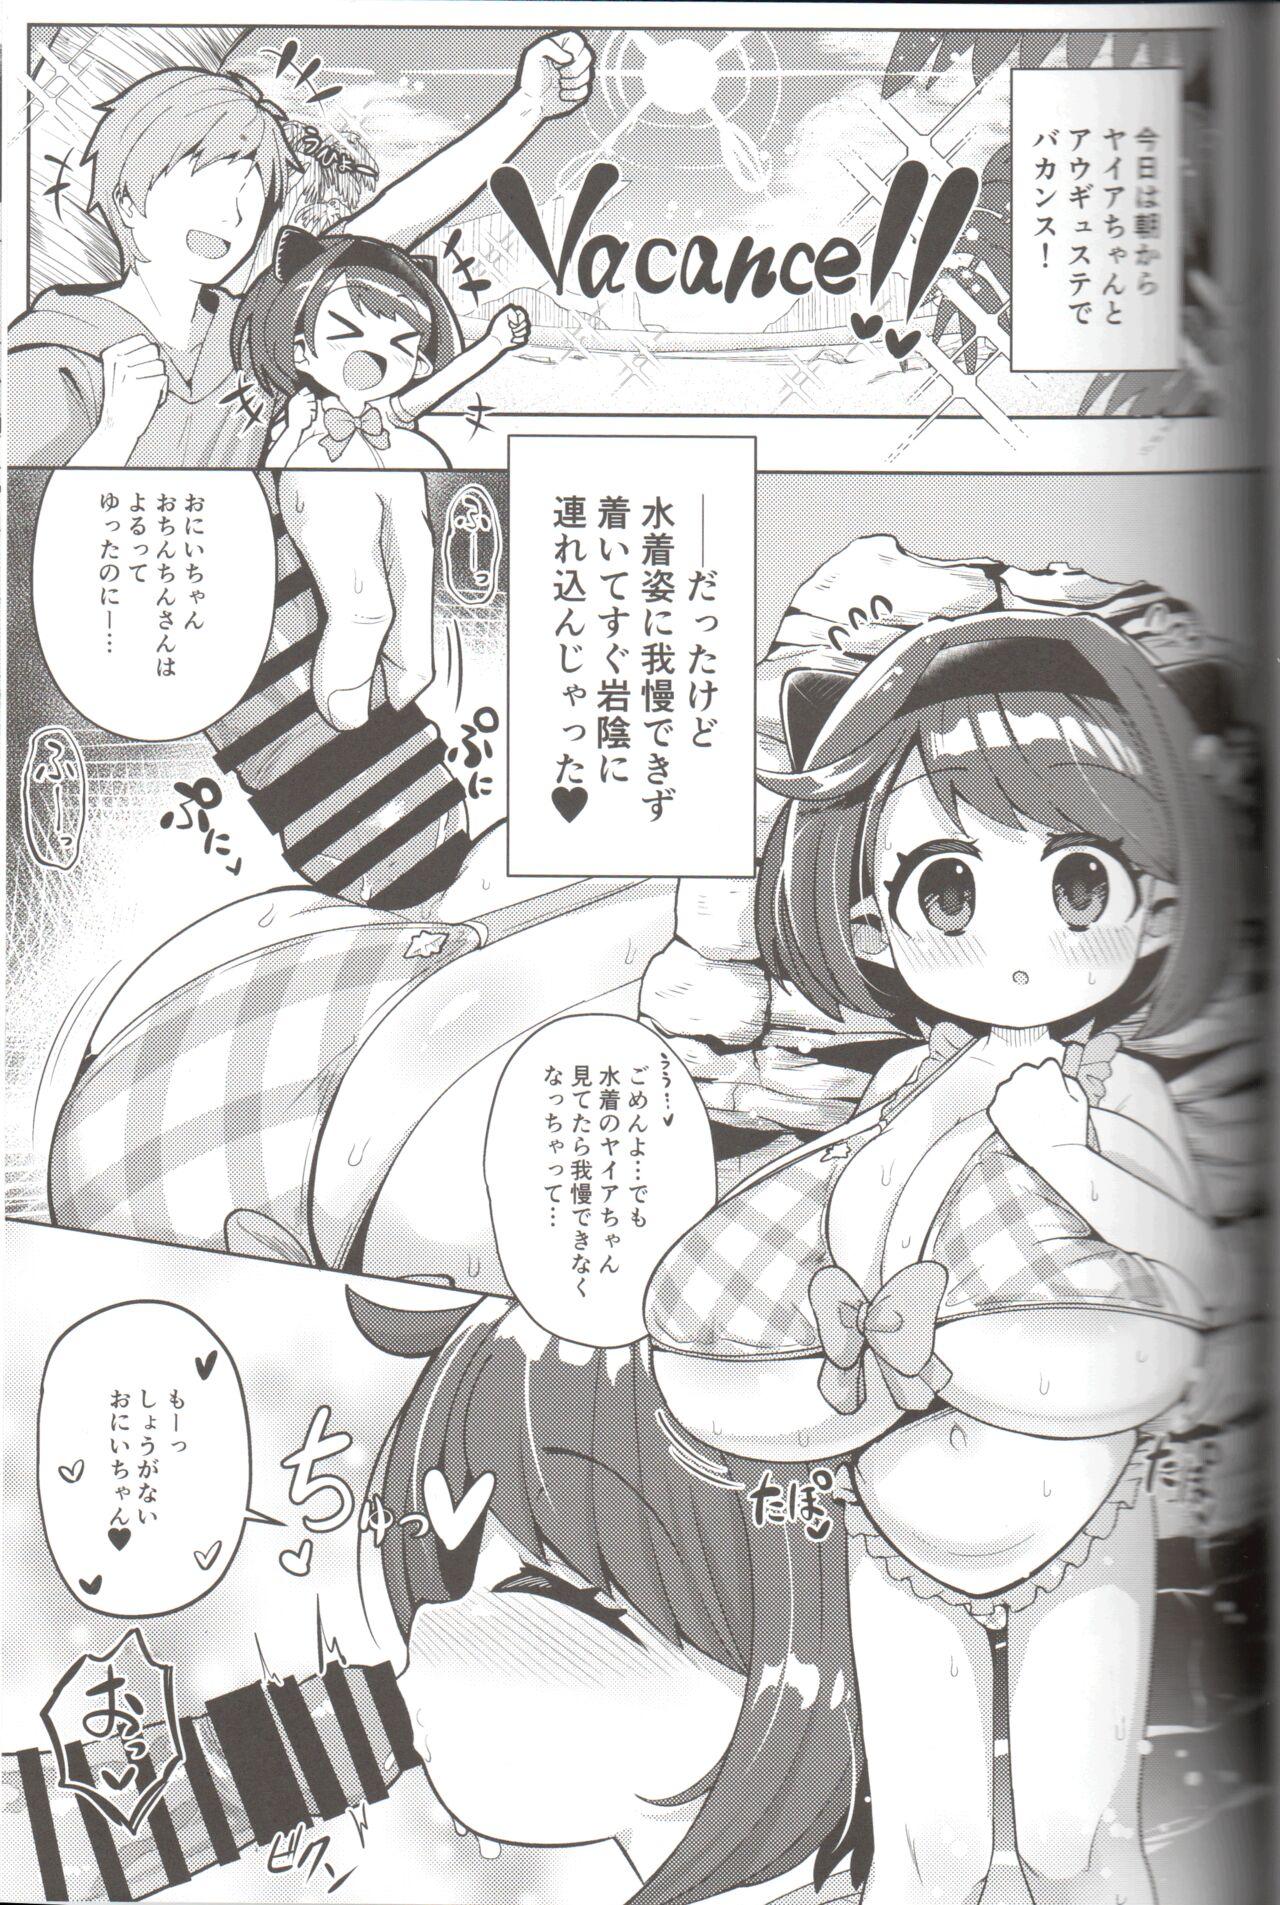 Twinks Yaia-chan to Vacances o Tanoshimou! - Granblue fantasy Workout - Page 2